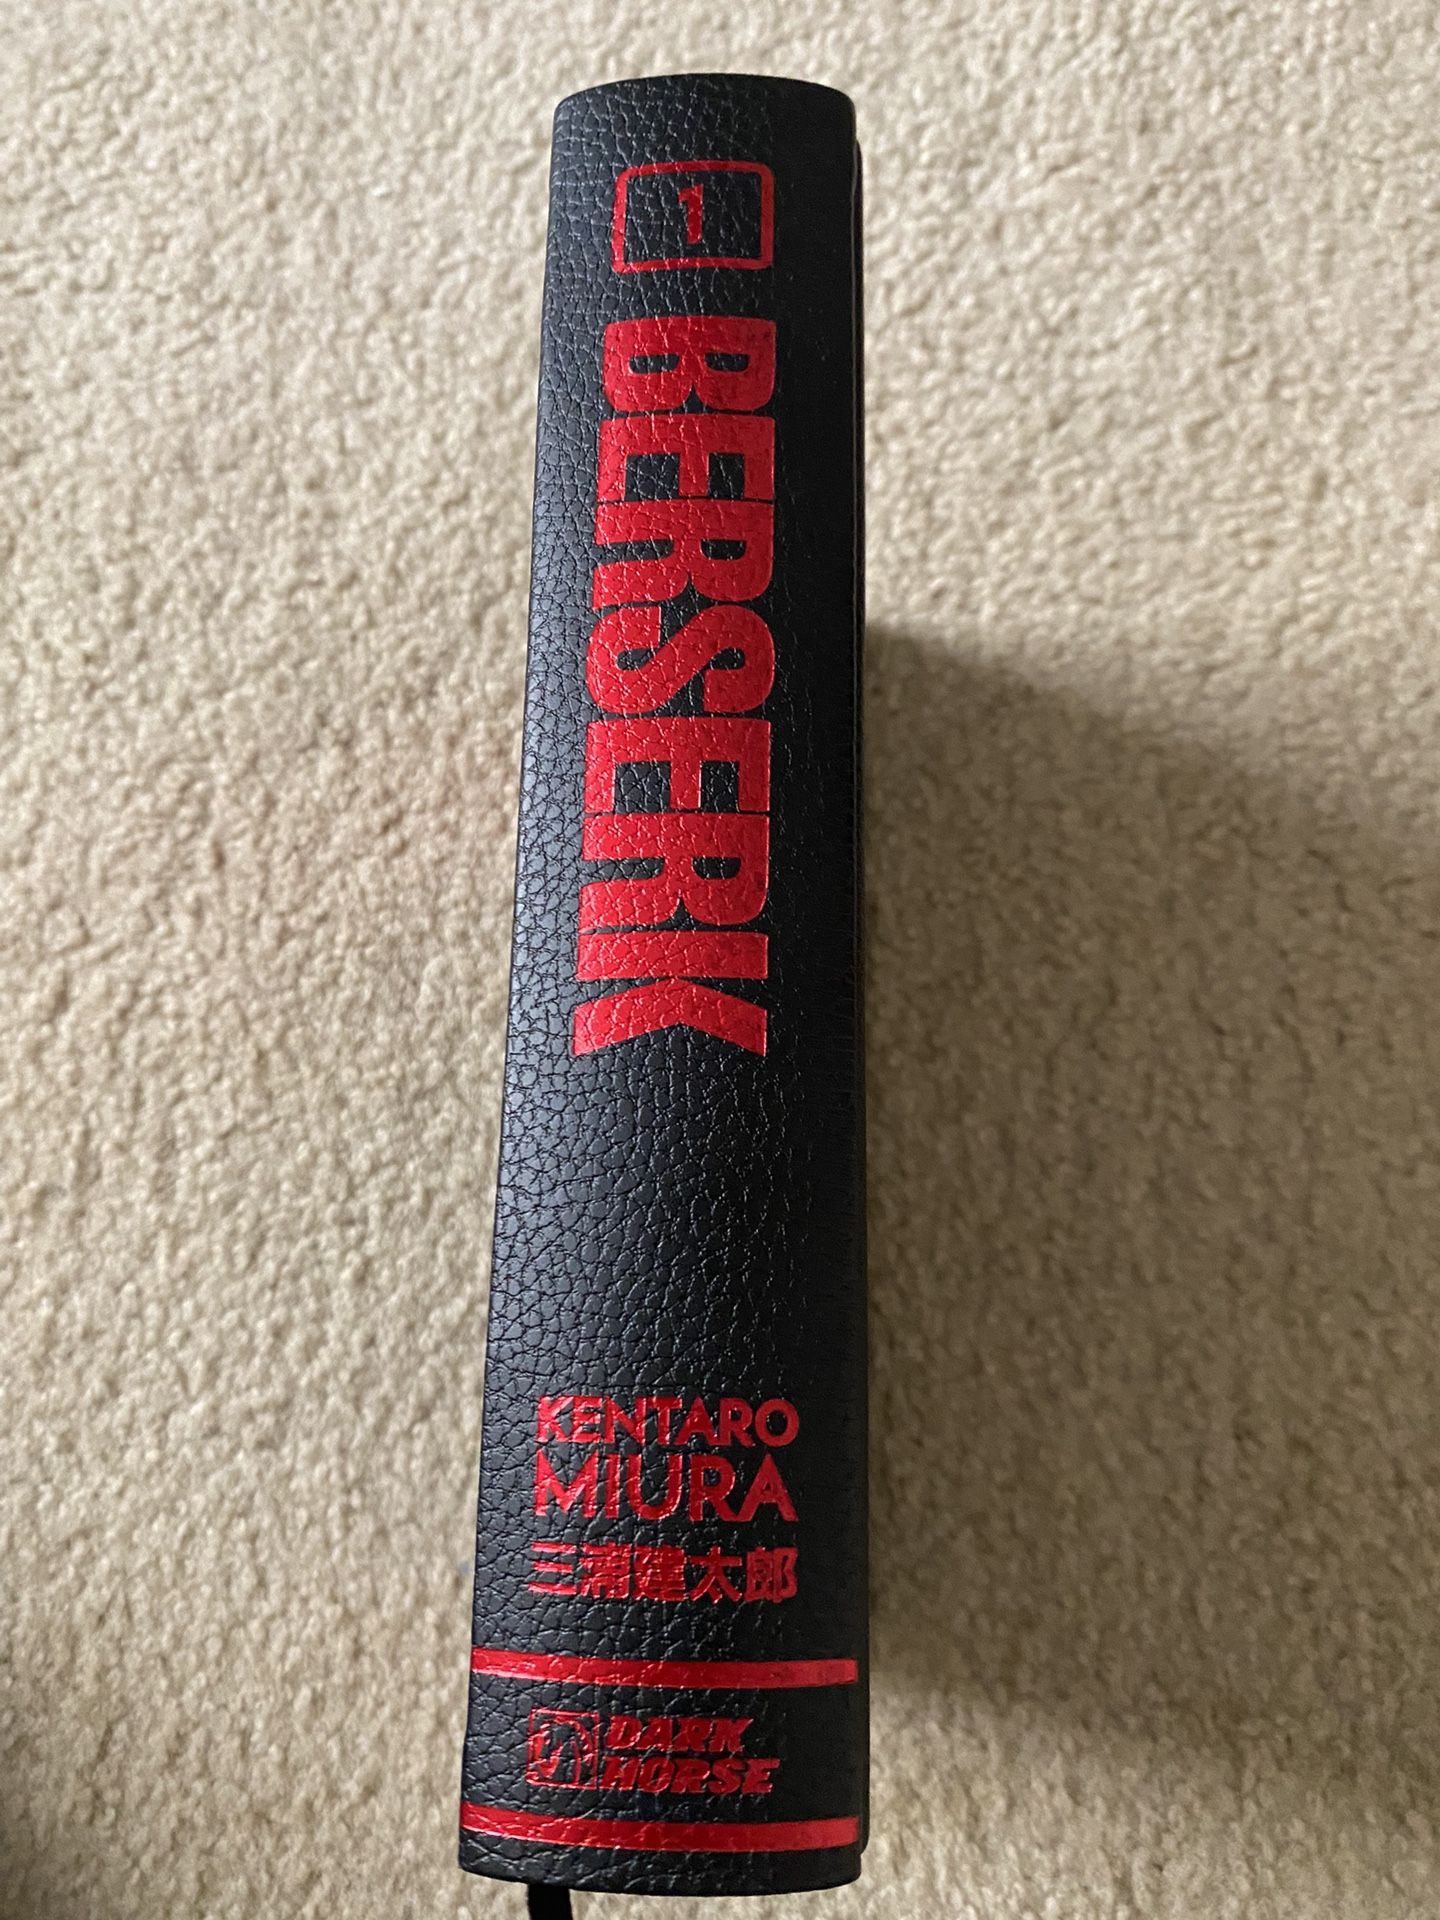 BERSERK Vol. 1 Deluxe Edition for Sale in Houston, TX - OfferUp